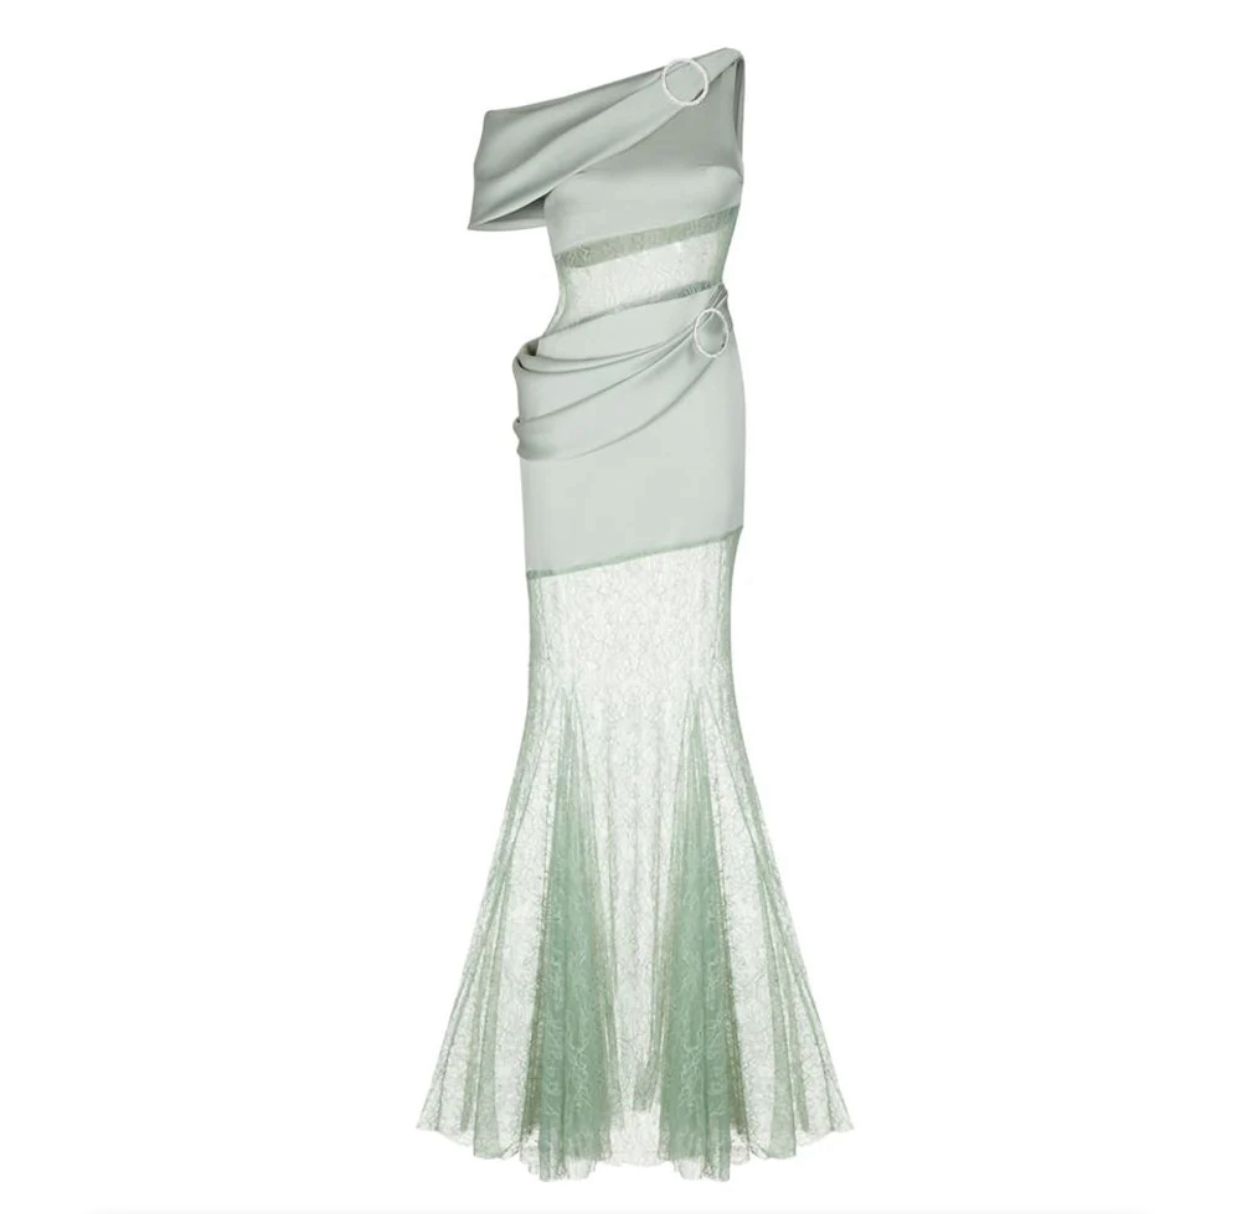 NEXT DAY DELIVERY AKASYA Asymmetrical Lace Maxi Bodycon Dress